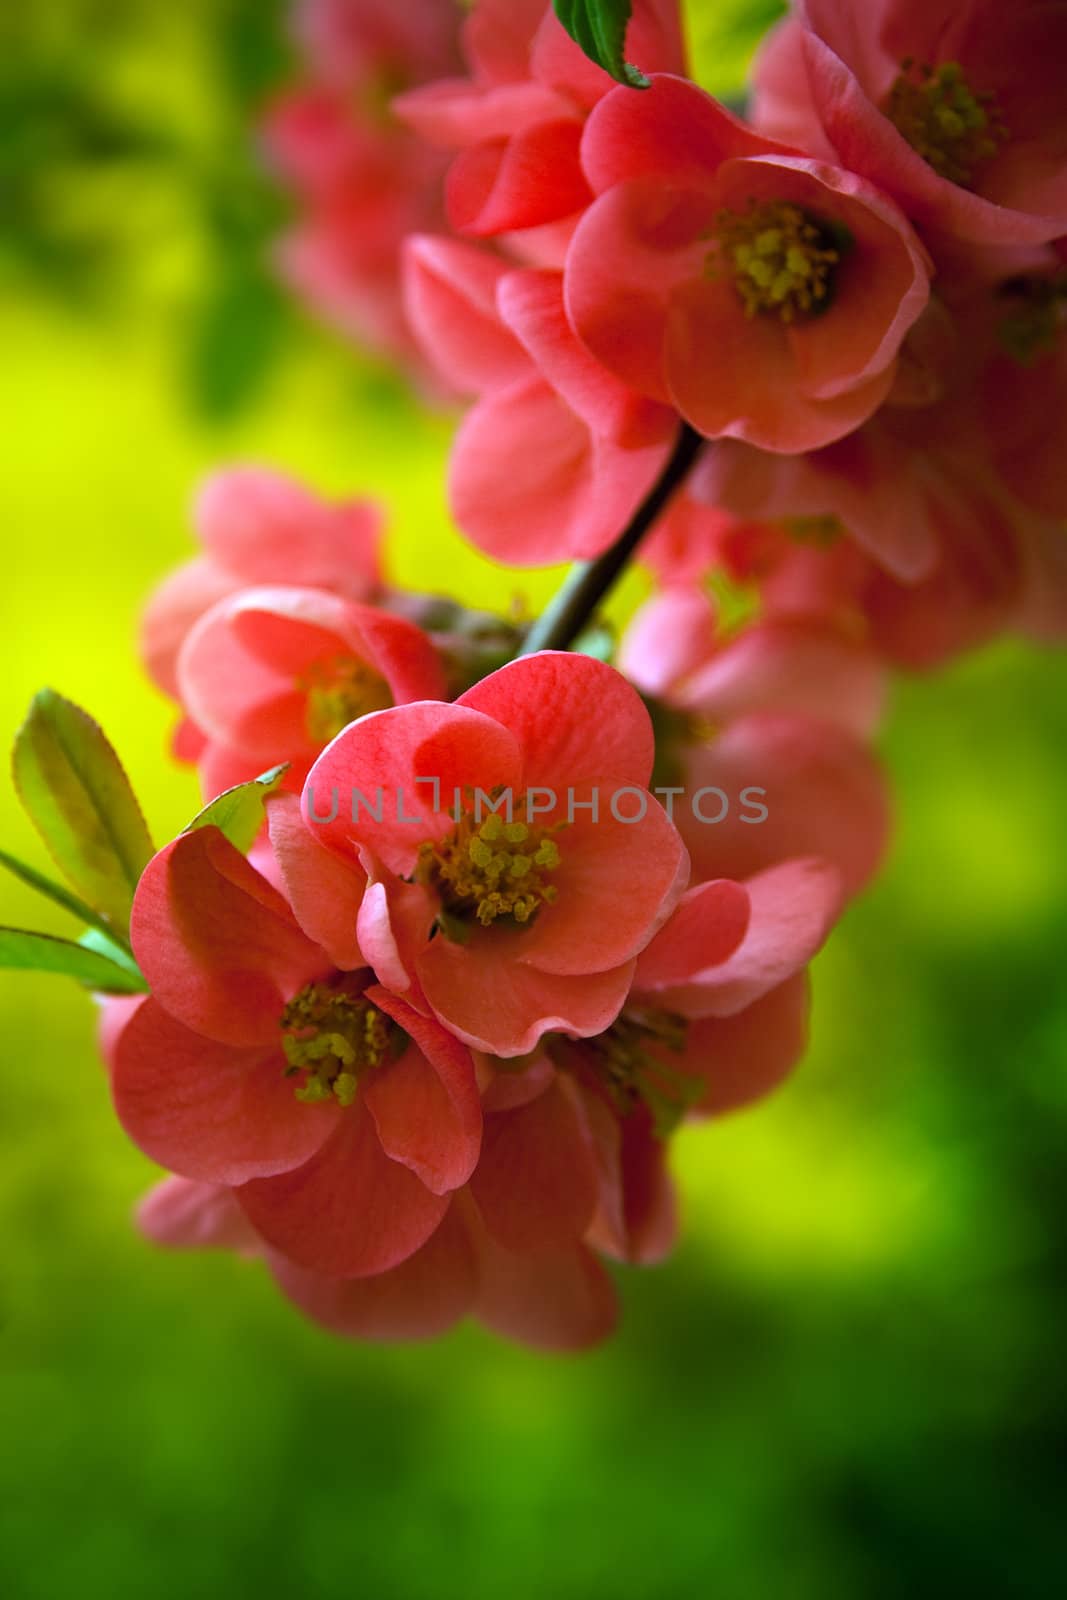 Japenese flowering crabapple flowers by chrisroll